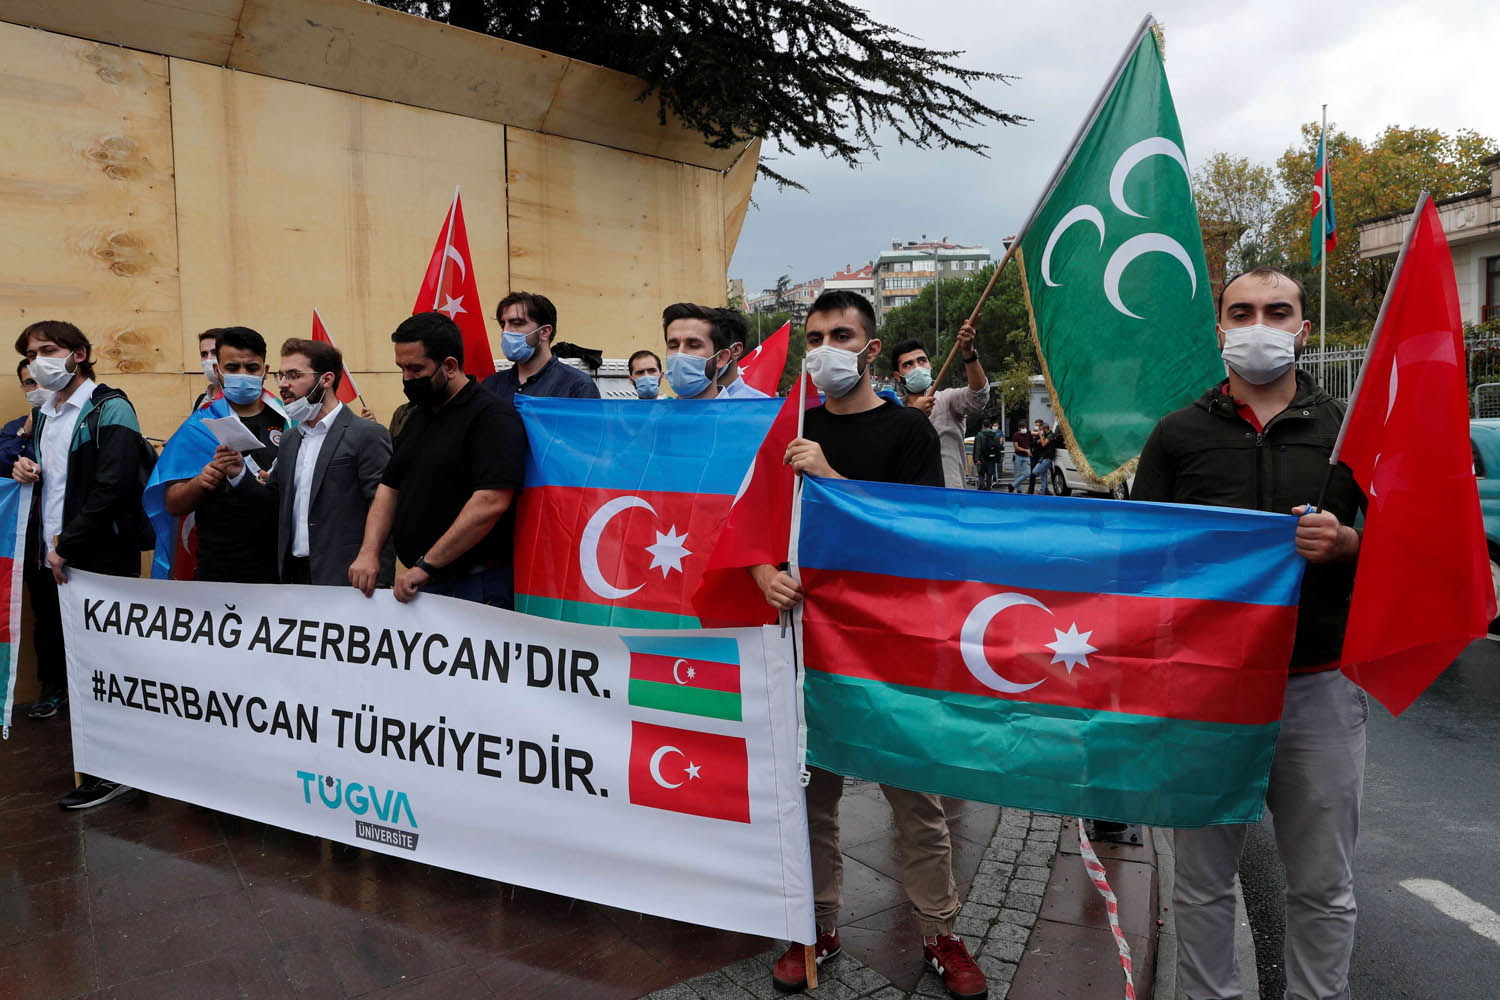 متظاهرون اذريون وأتراك لتأييد اذريبجان في حرب ناغورني كاراباخ